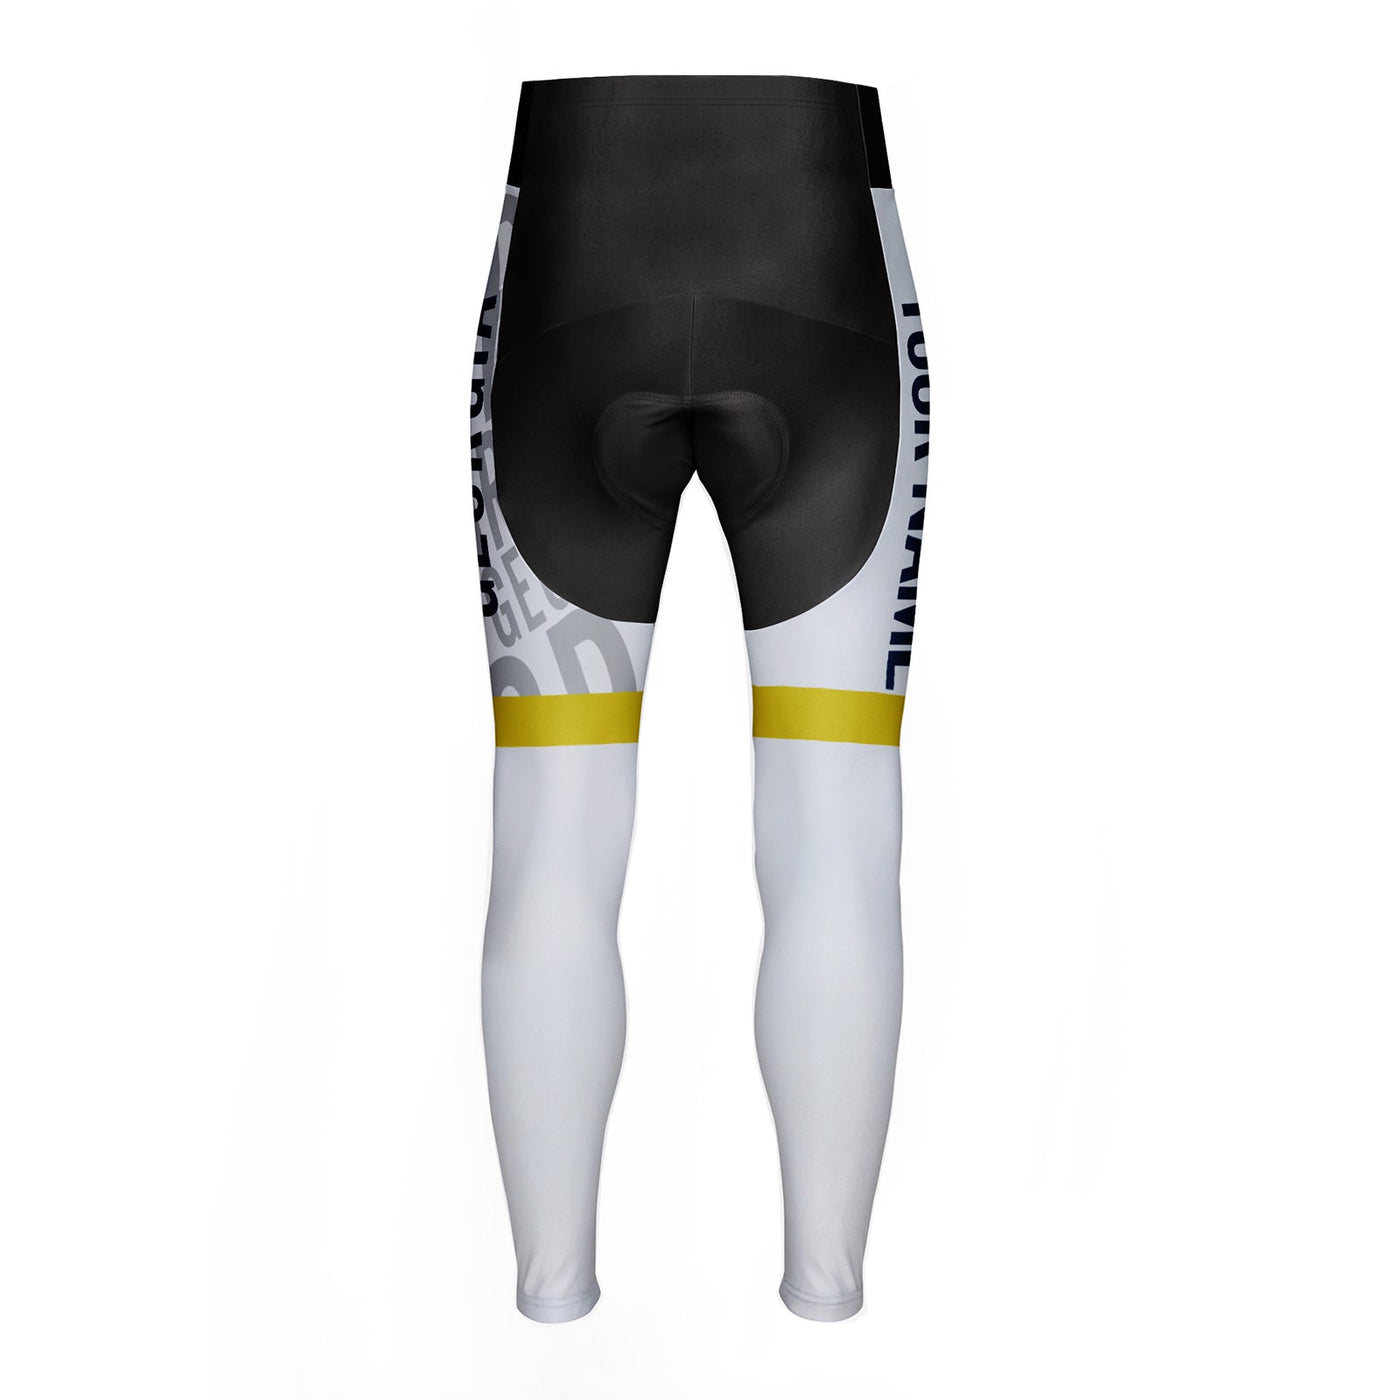 Customized Georgia Unisex Thermal Fleece Cycling Tights Long Pants